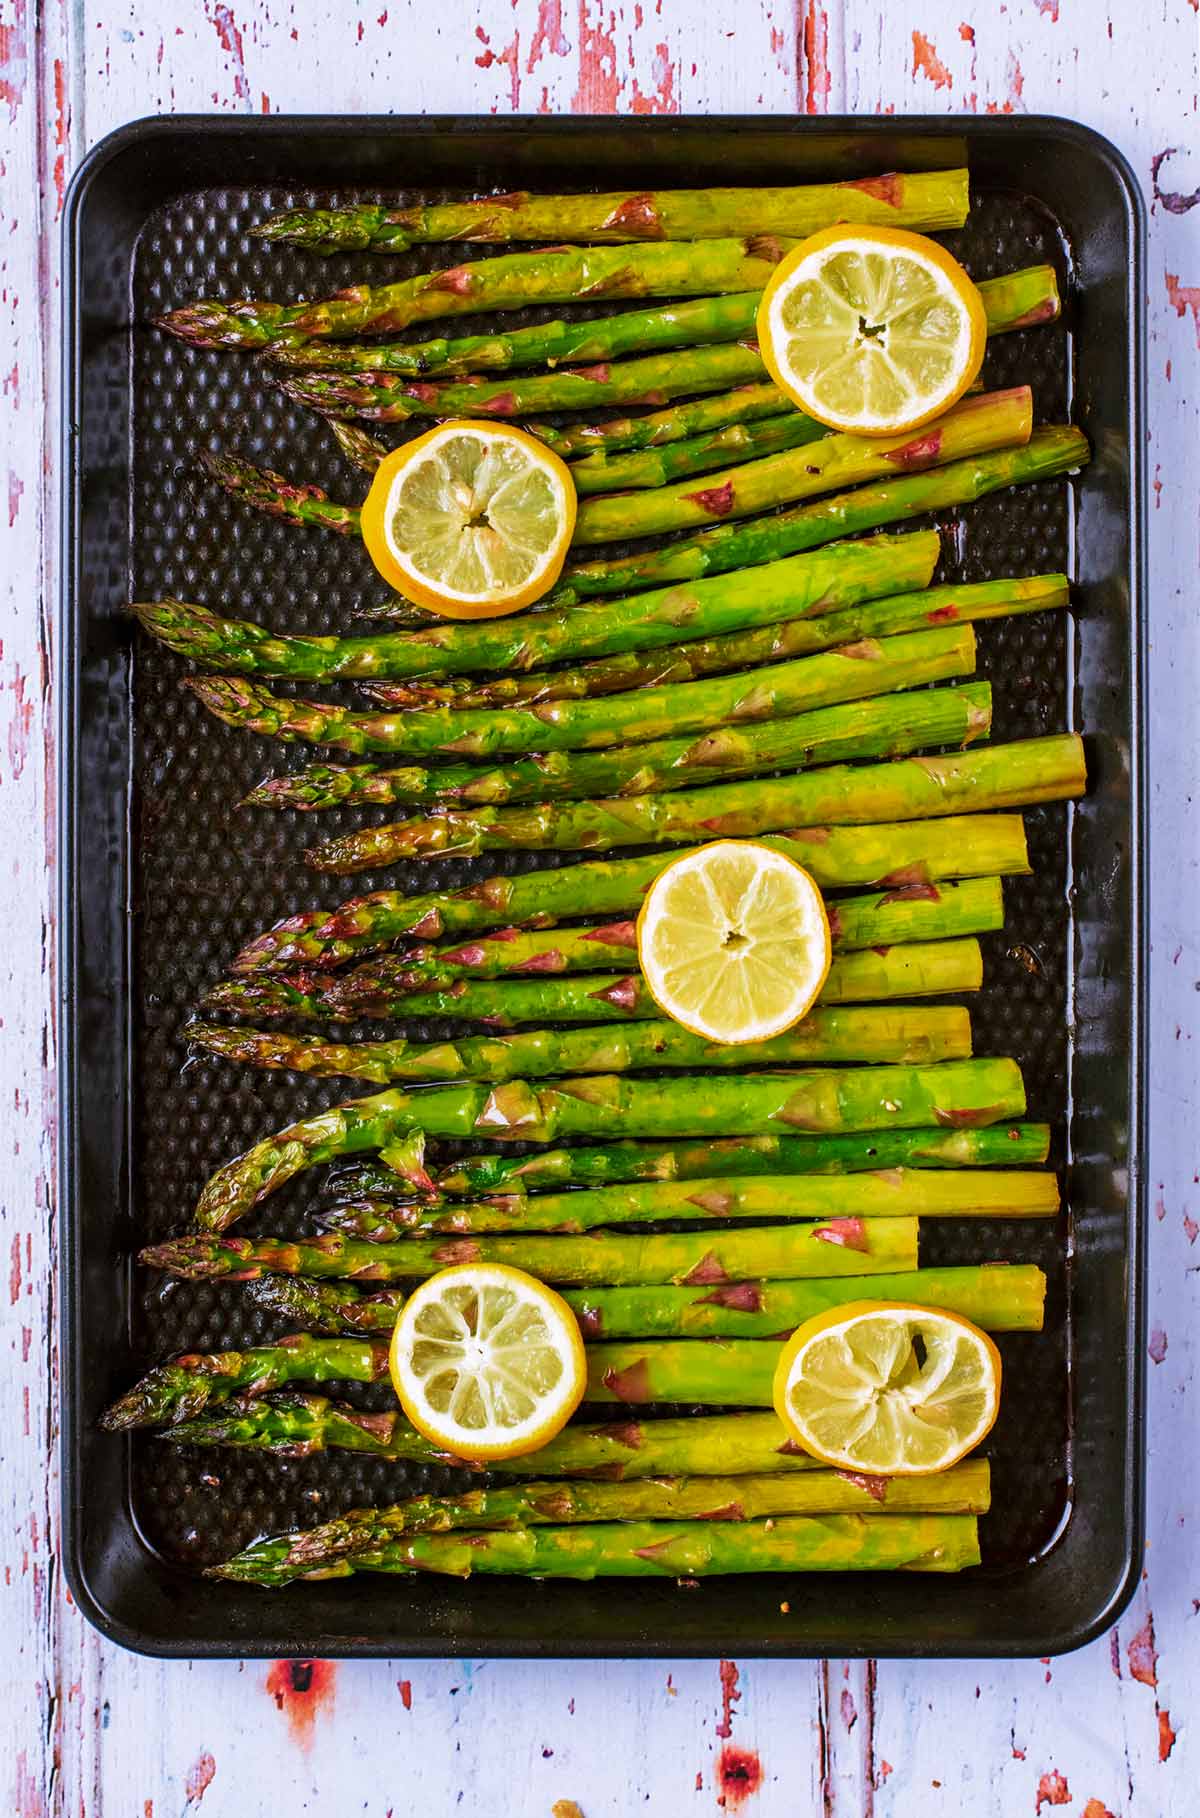 Roasted asparagus on a baking tray.